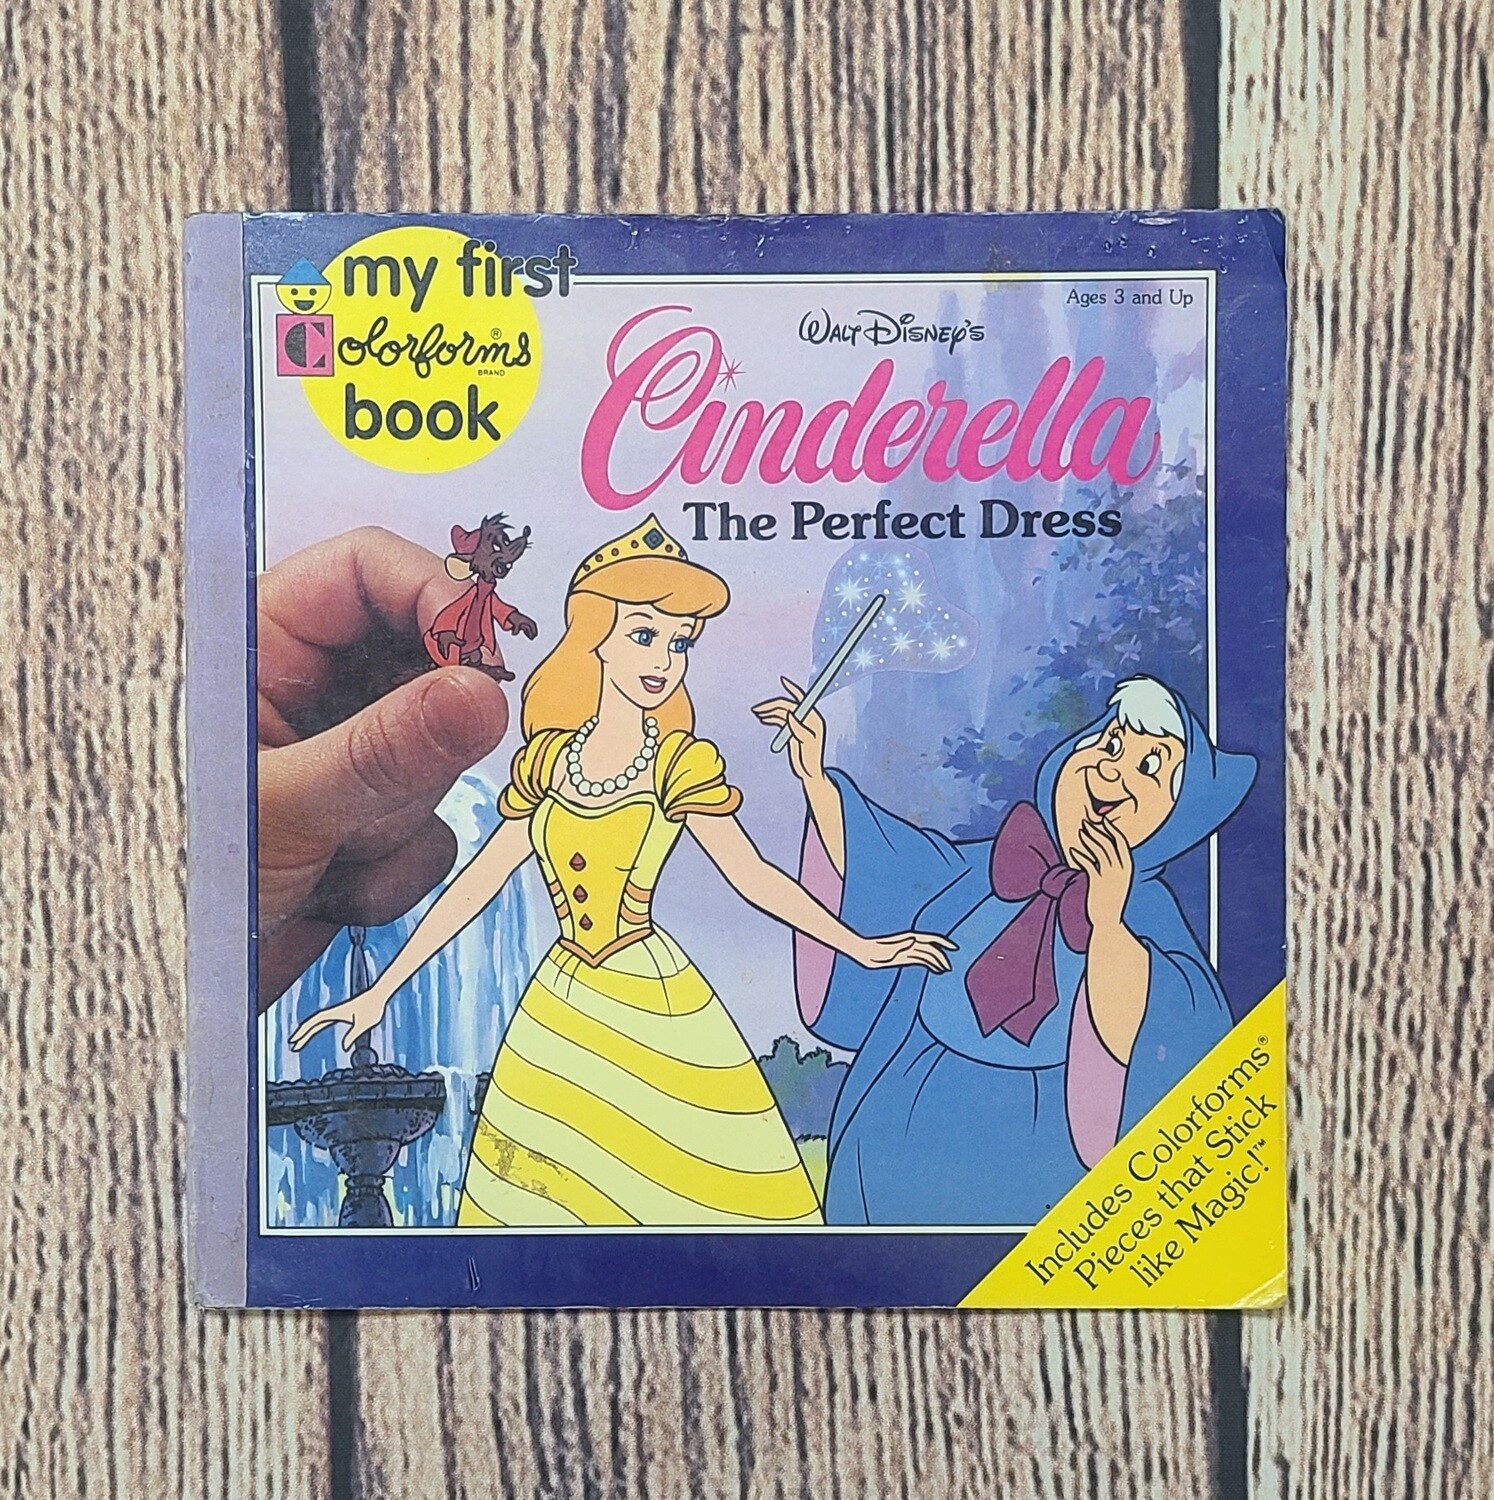 Cinderella: The Perfect Dress by The Walt Disney Company